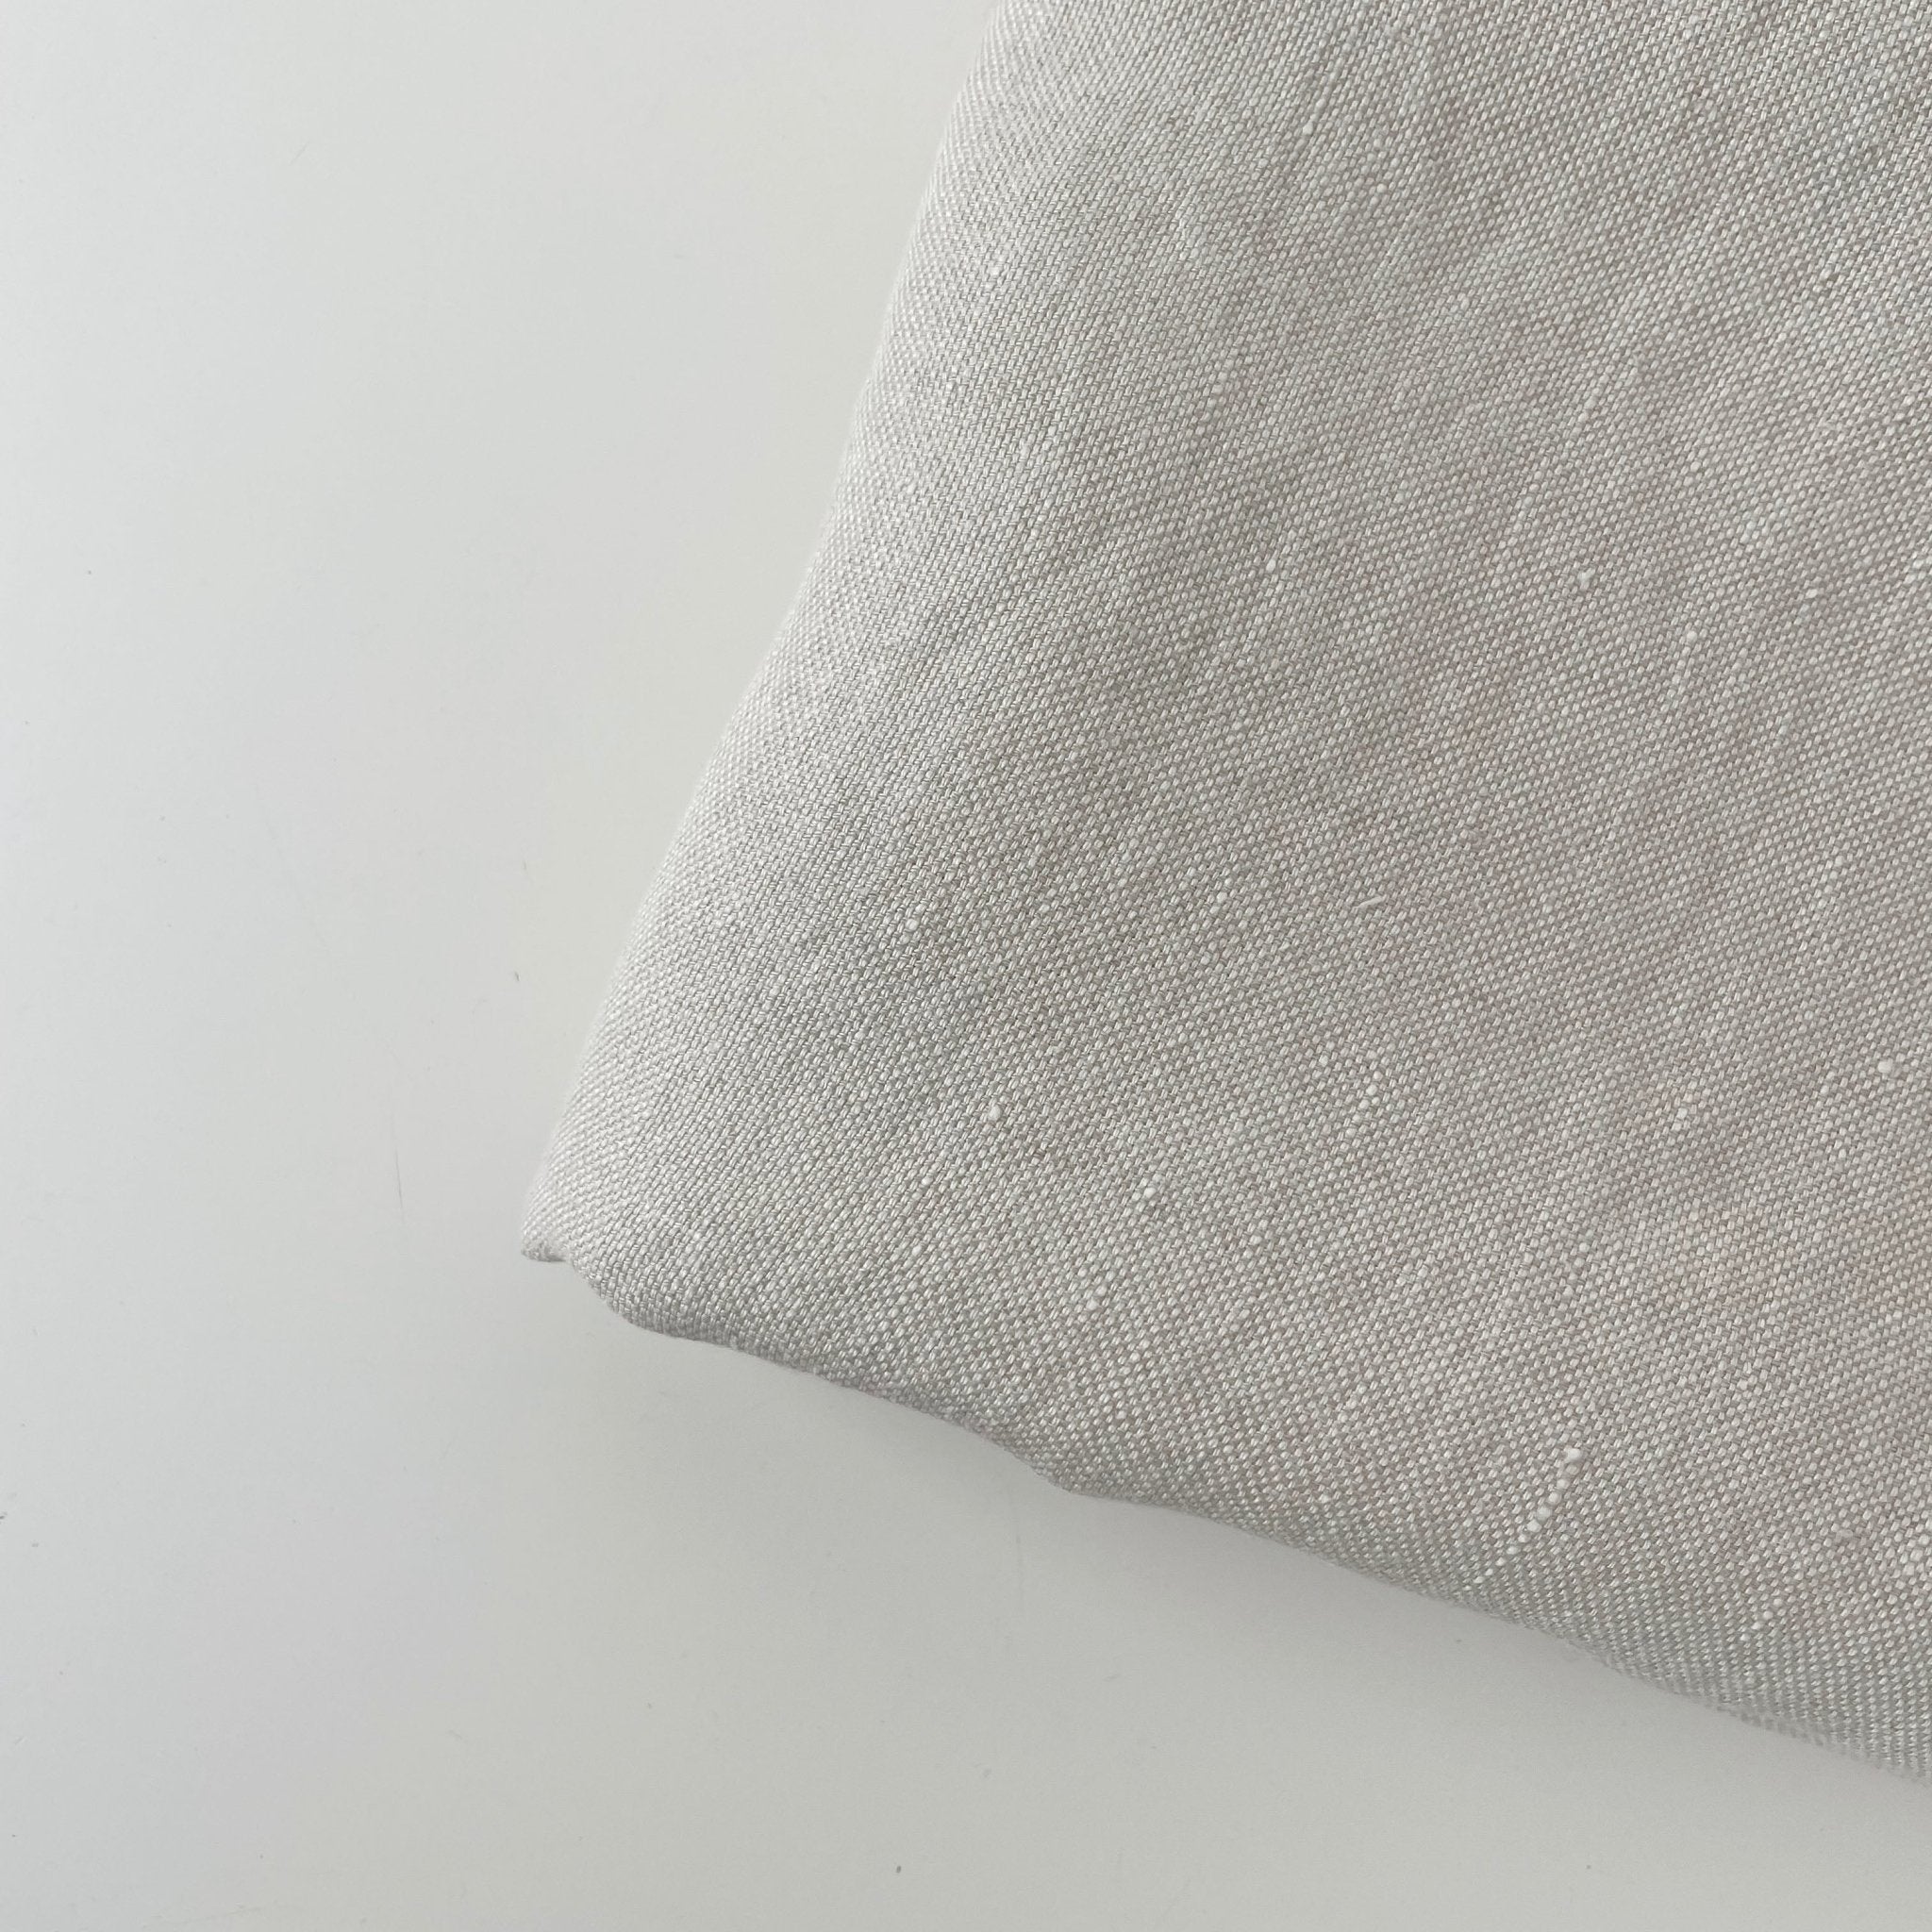 Linen Natural Grey Dot Fabric 7288 7438 - The Linen Lab - Natural